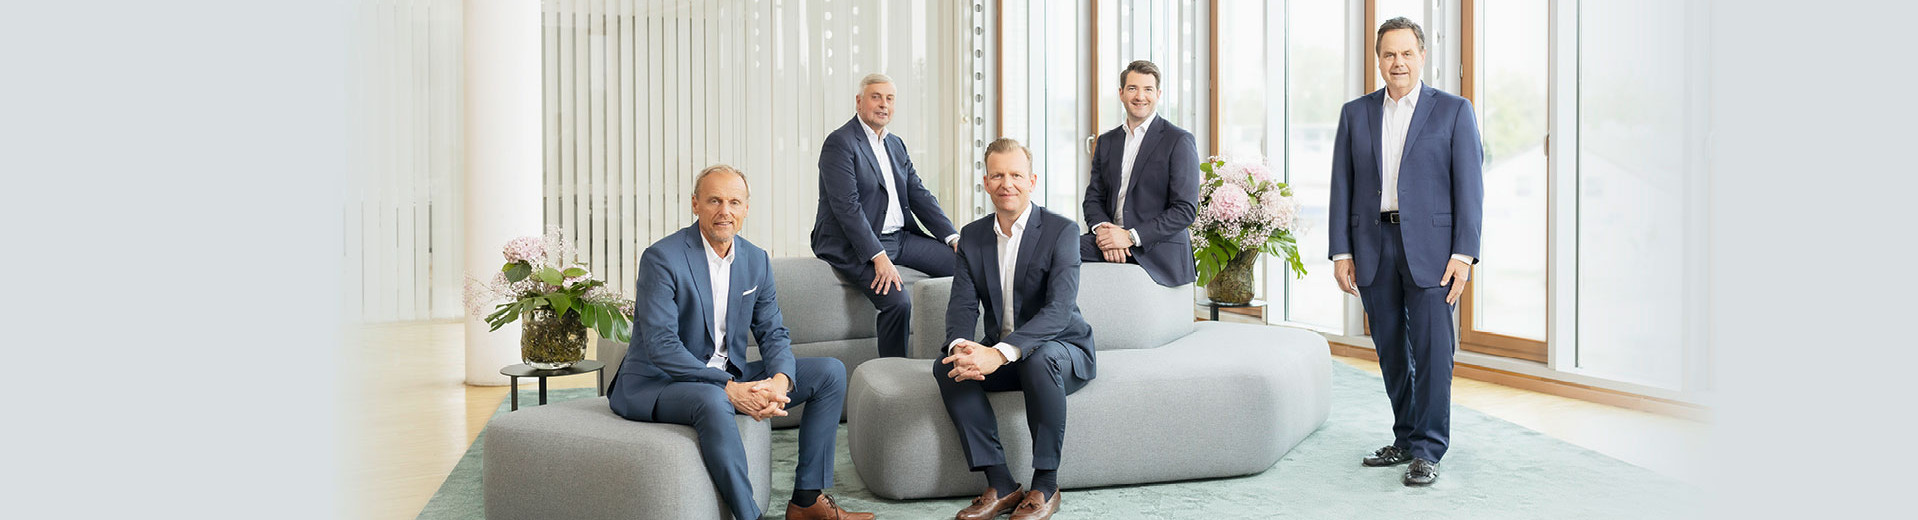 The executive leadership team of the PARI Group – Arne W. Dirks, Jürgen Müller, Dr. Frank Bredl, Dr. Stefan Seemann, Geoff A. Hunziker